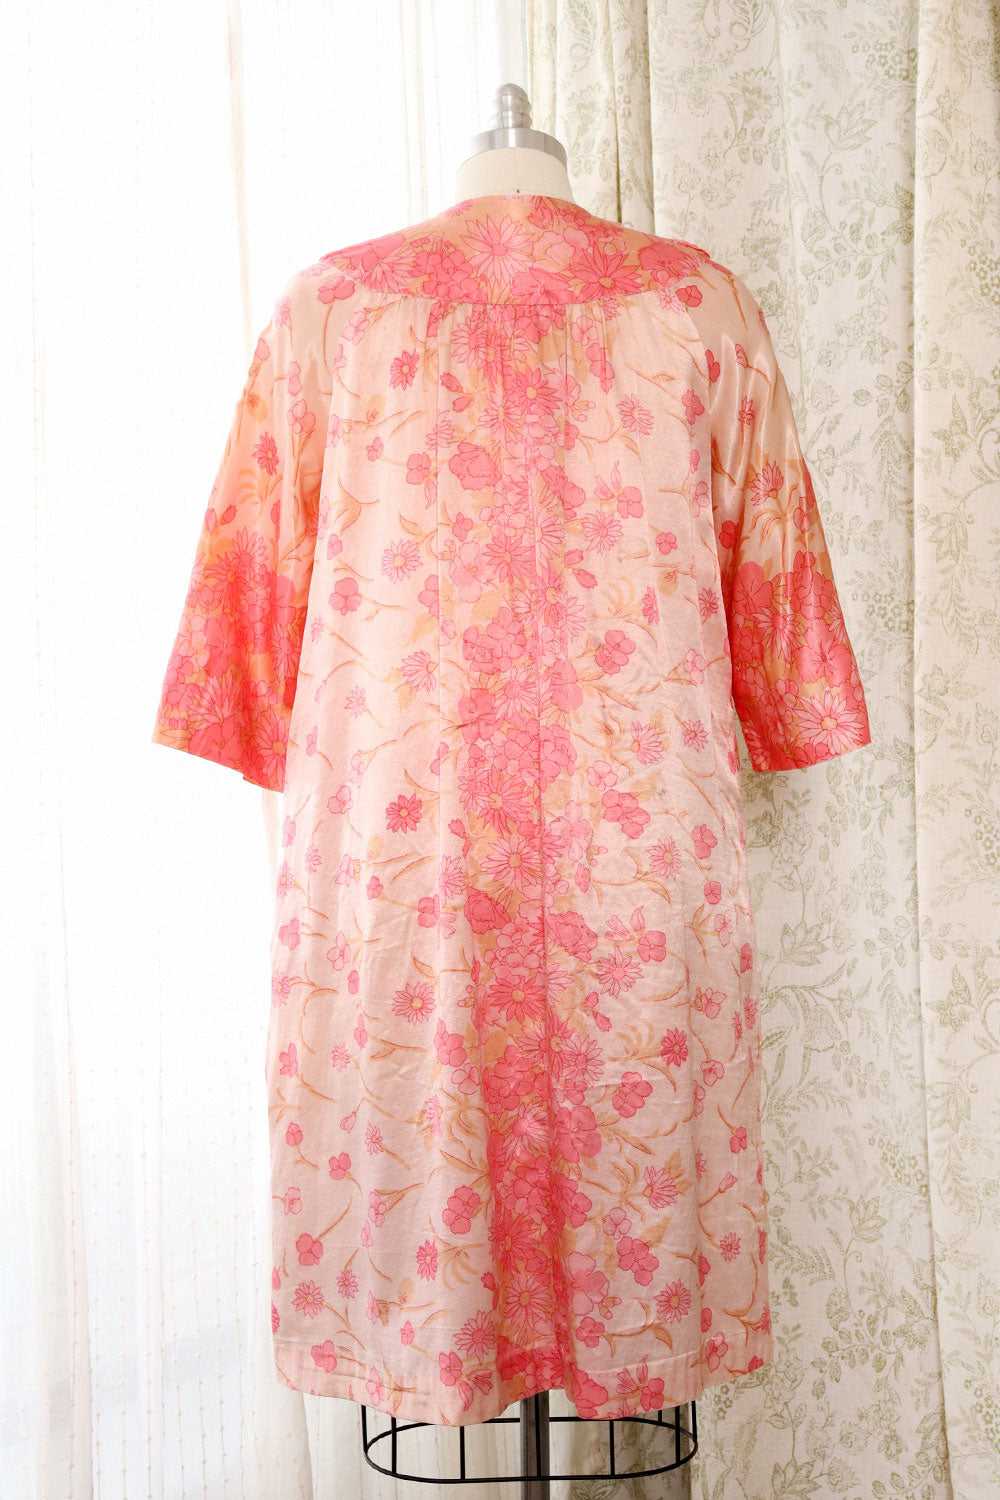 Cherry Blossom Satin Duster Dress M/L - image 3